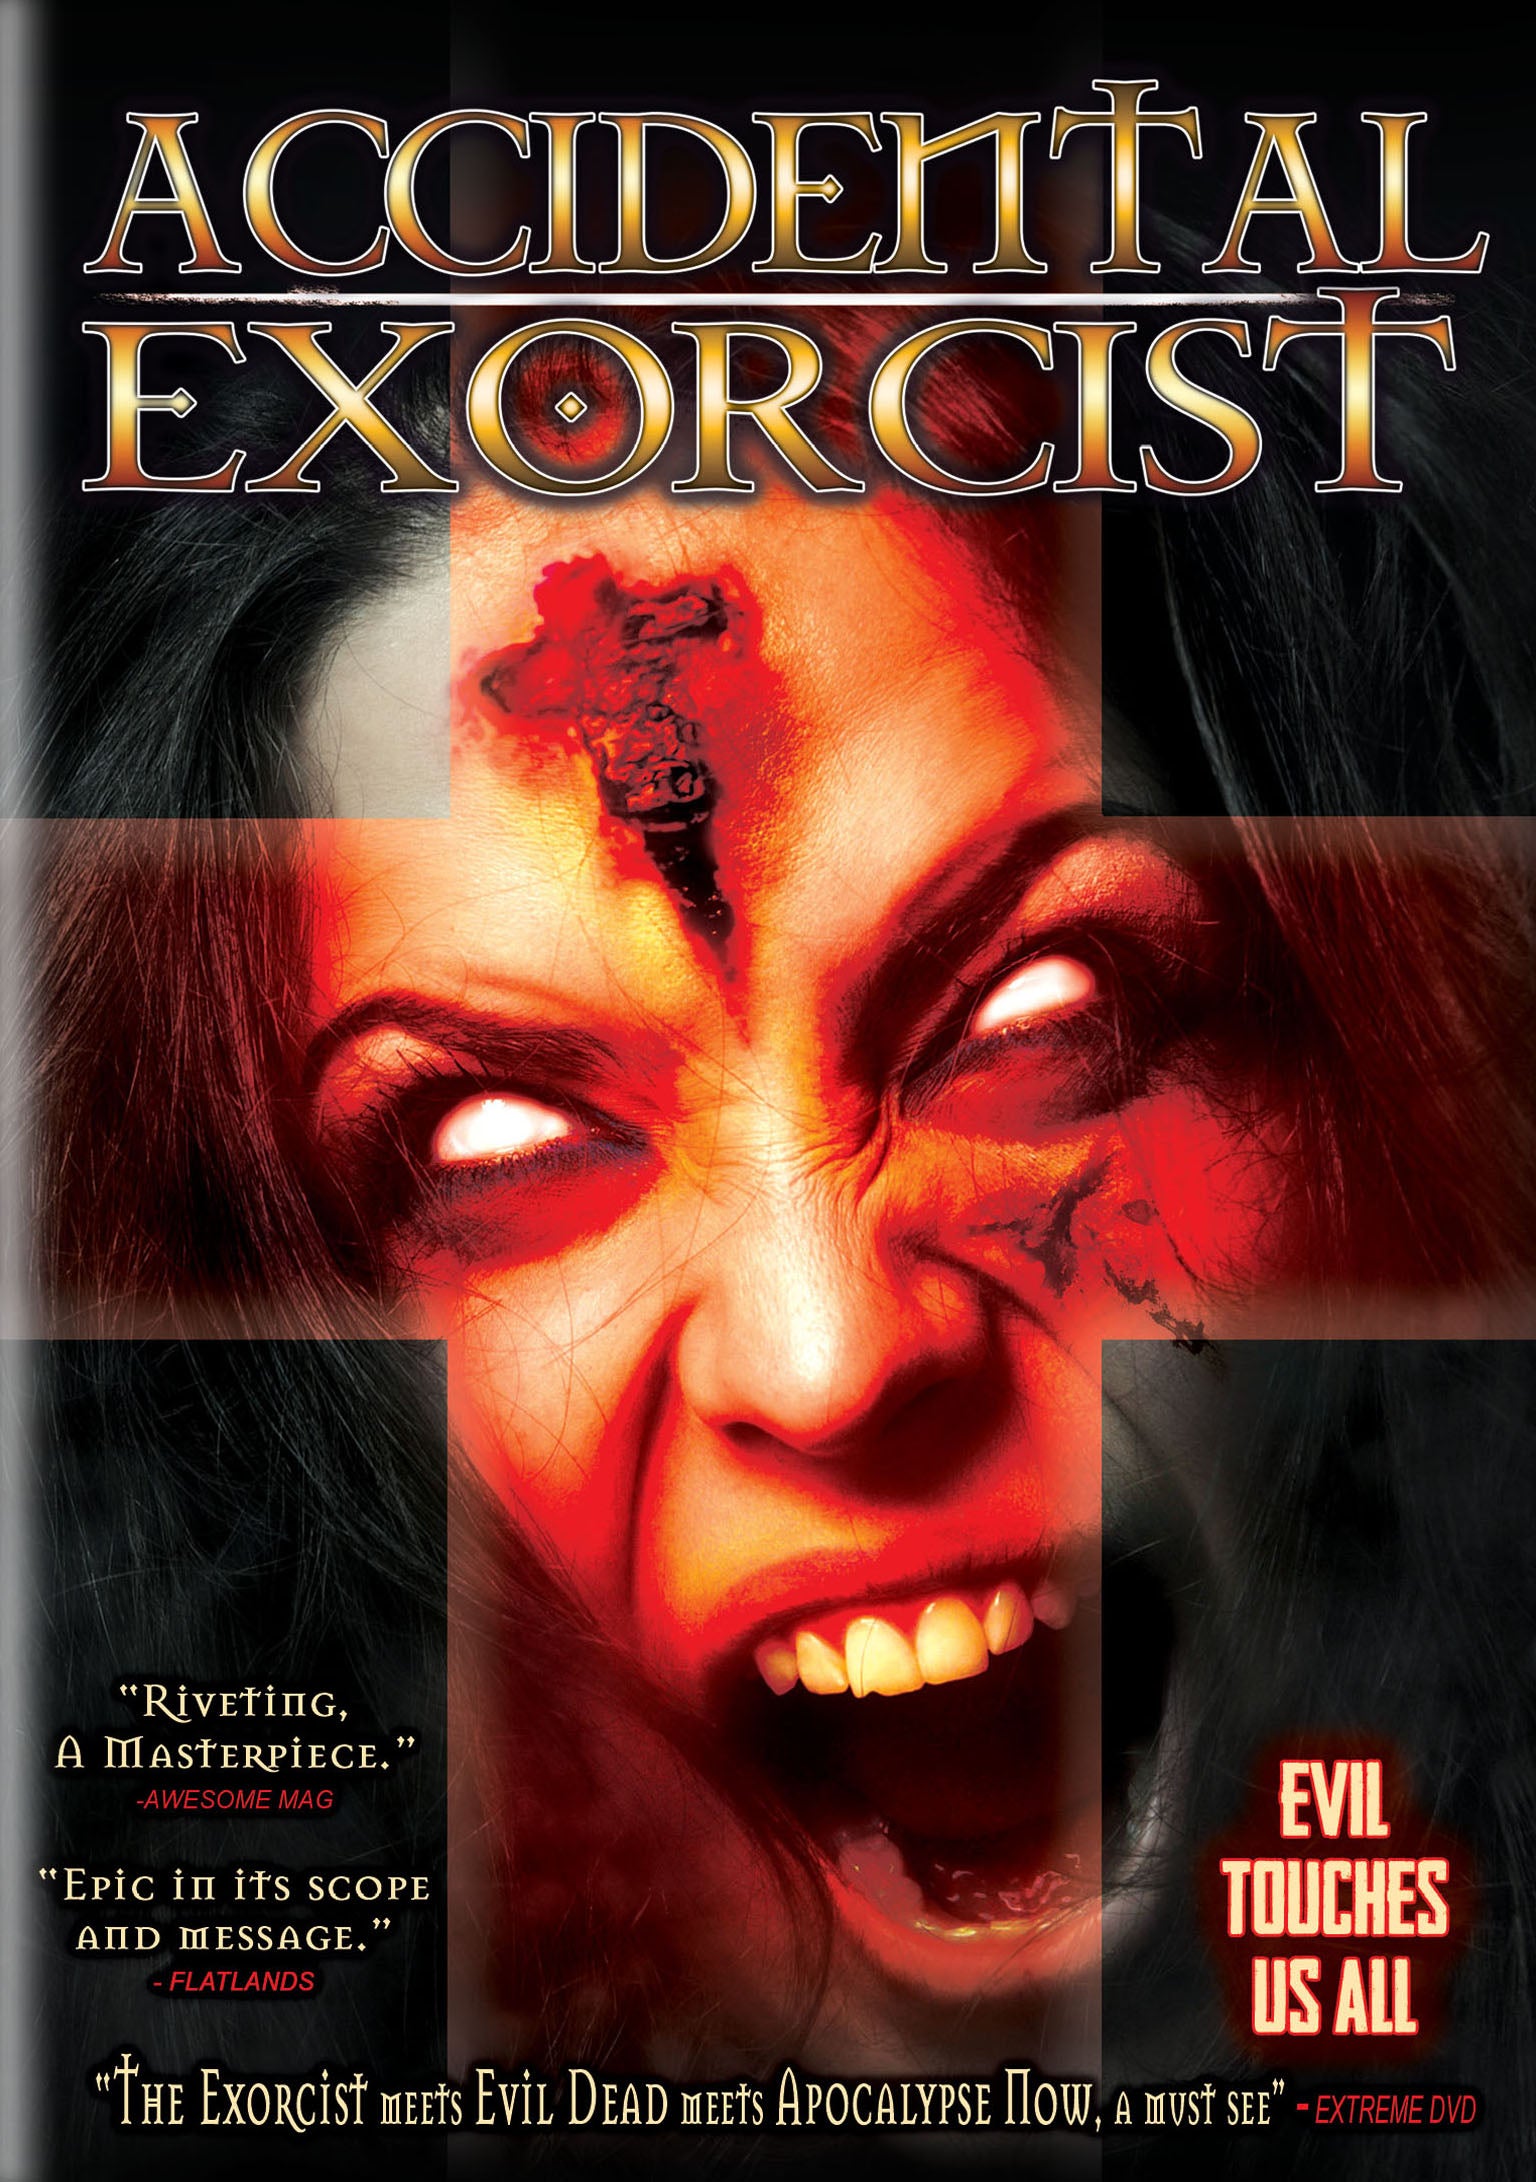 Accidental Exorcist cover art